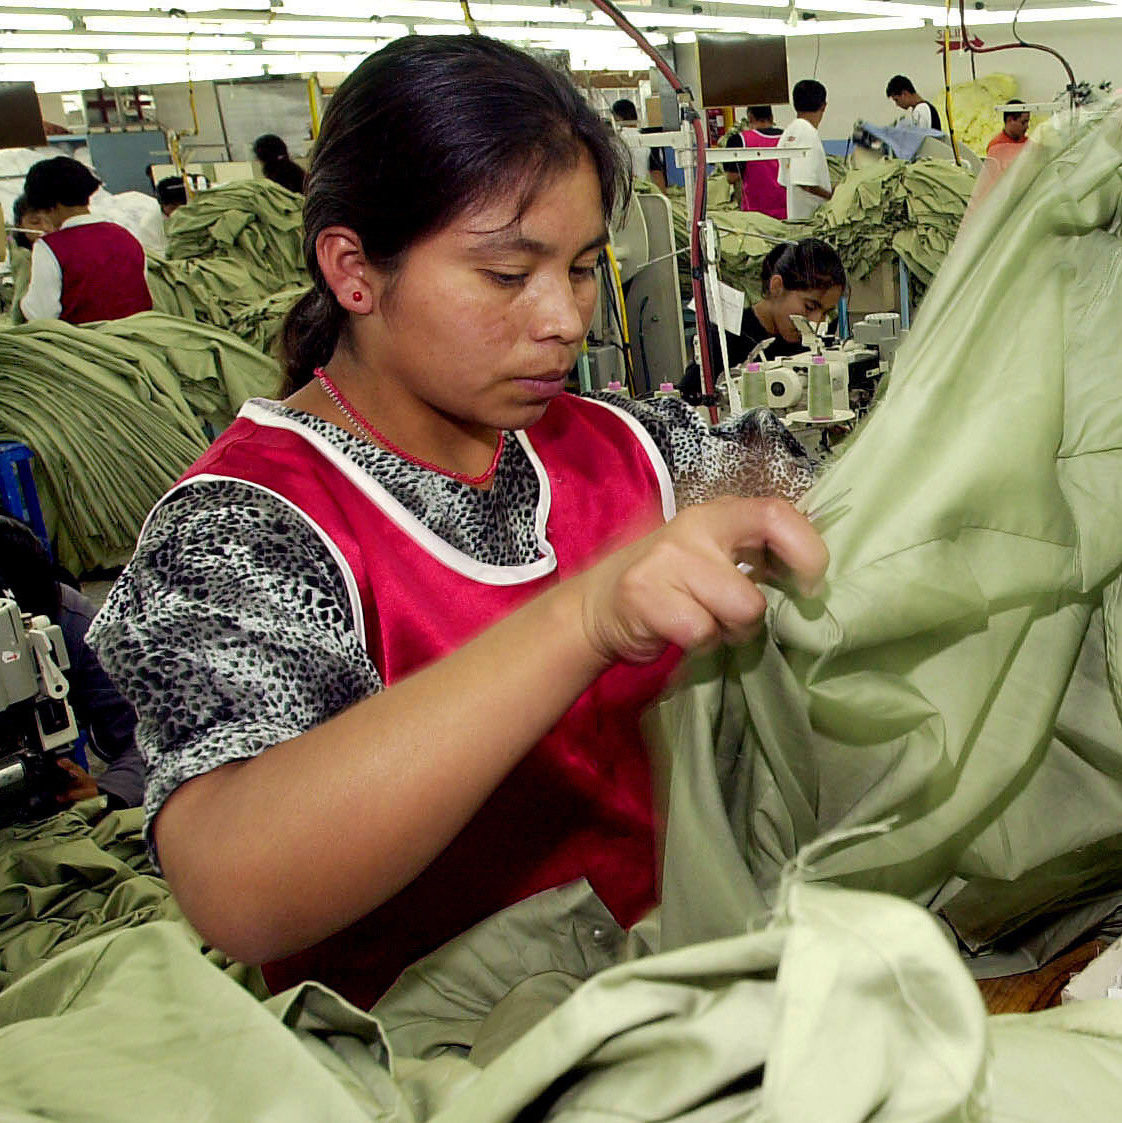 An unidentified woman works at a sweatshop Tuesday, Oct. 2, 2001. (AP Photo/Jaime Puebla)